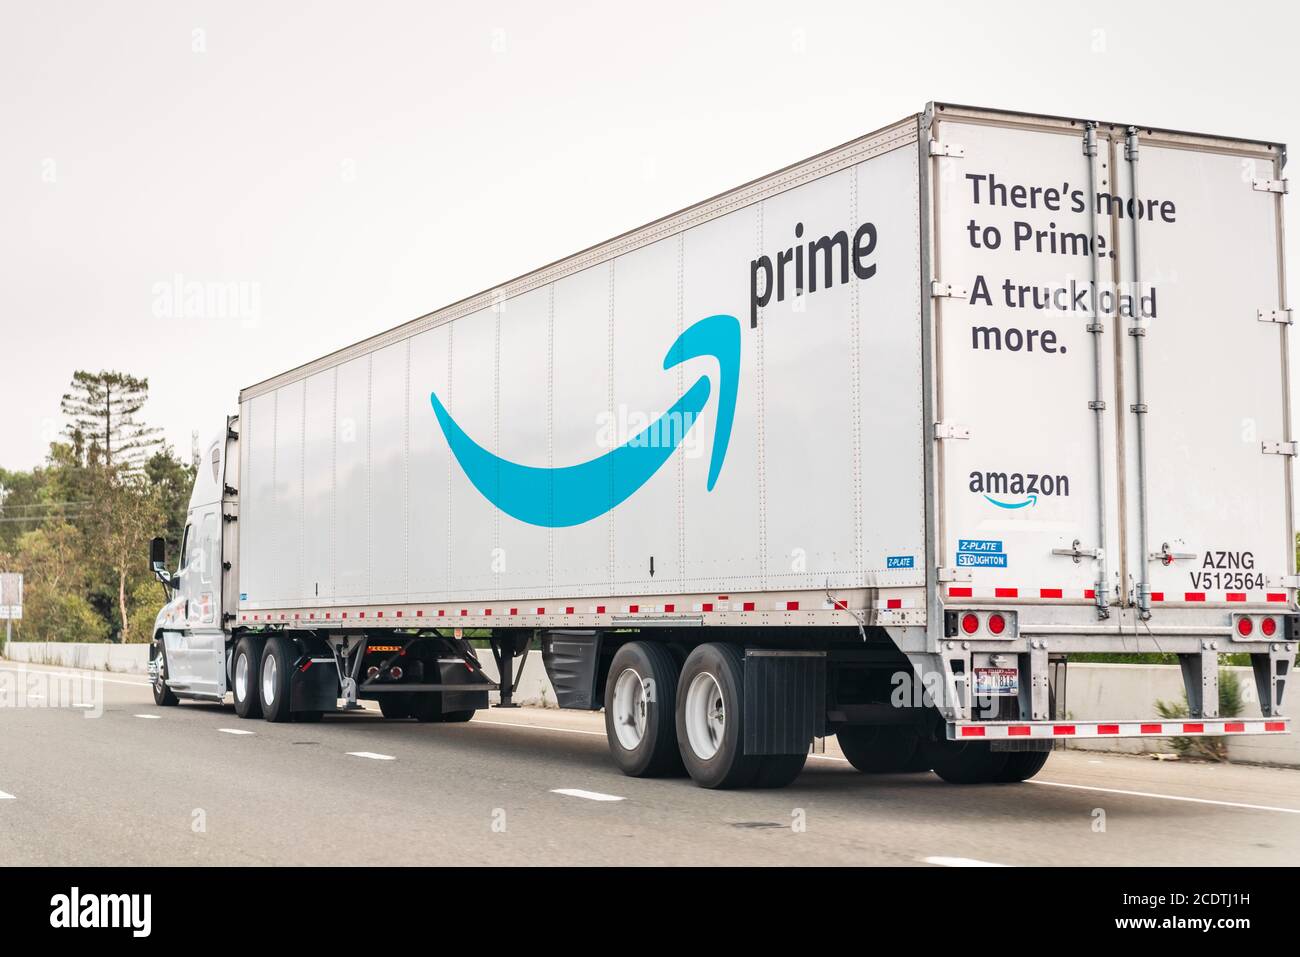 Amazon prime truck -Fotos und -Bildmaterial in hoher Auflösung – Alamy